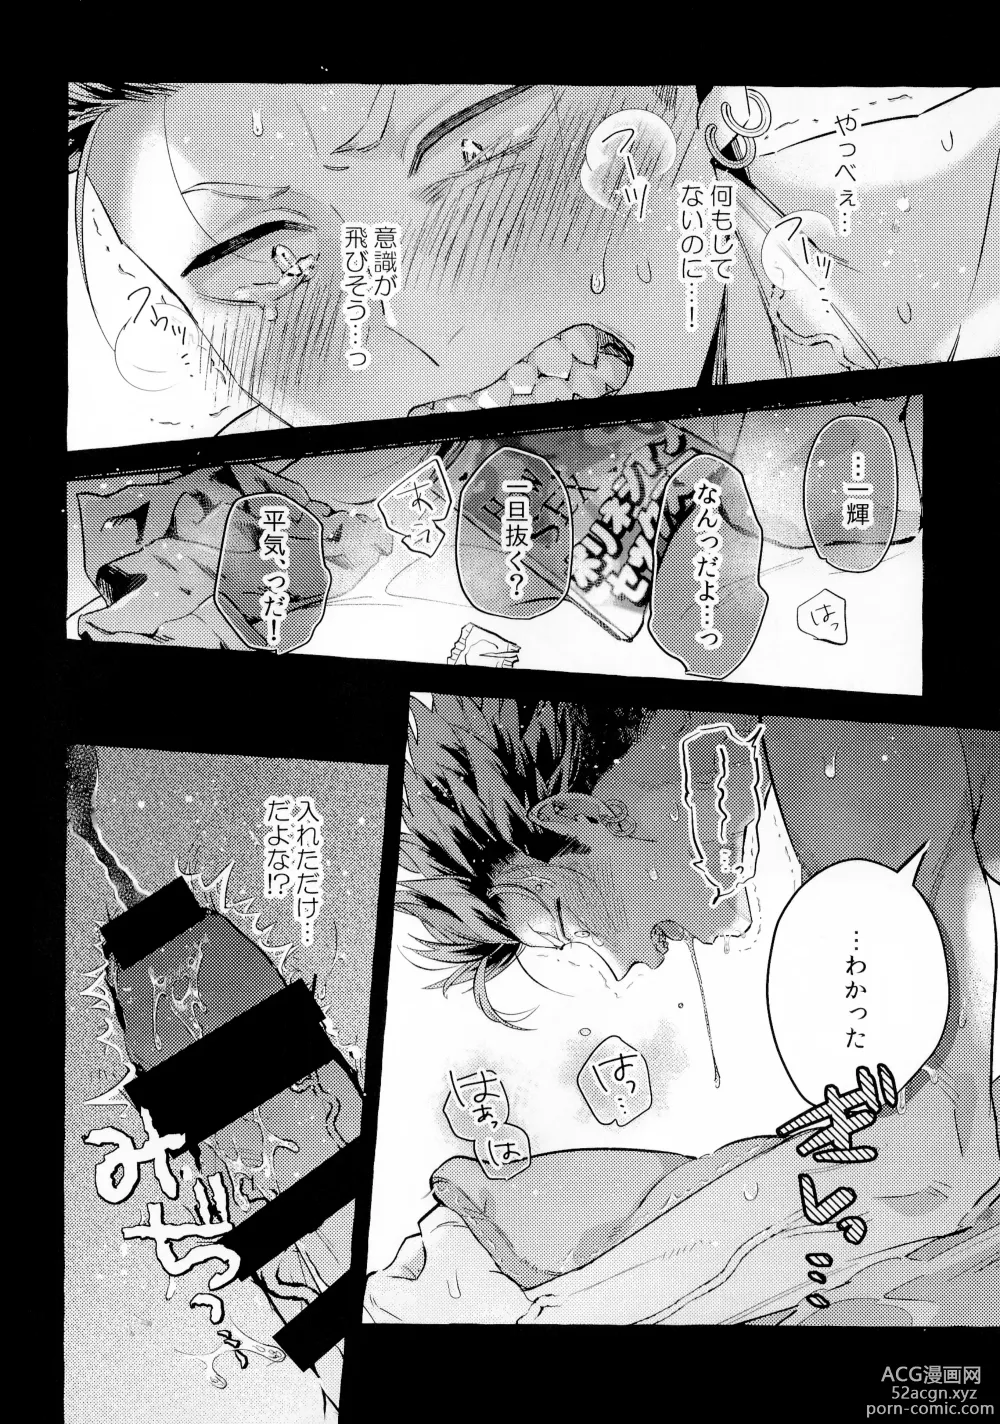 Page 5 of doujinshi skip run!run!run!